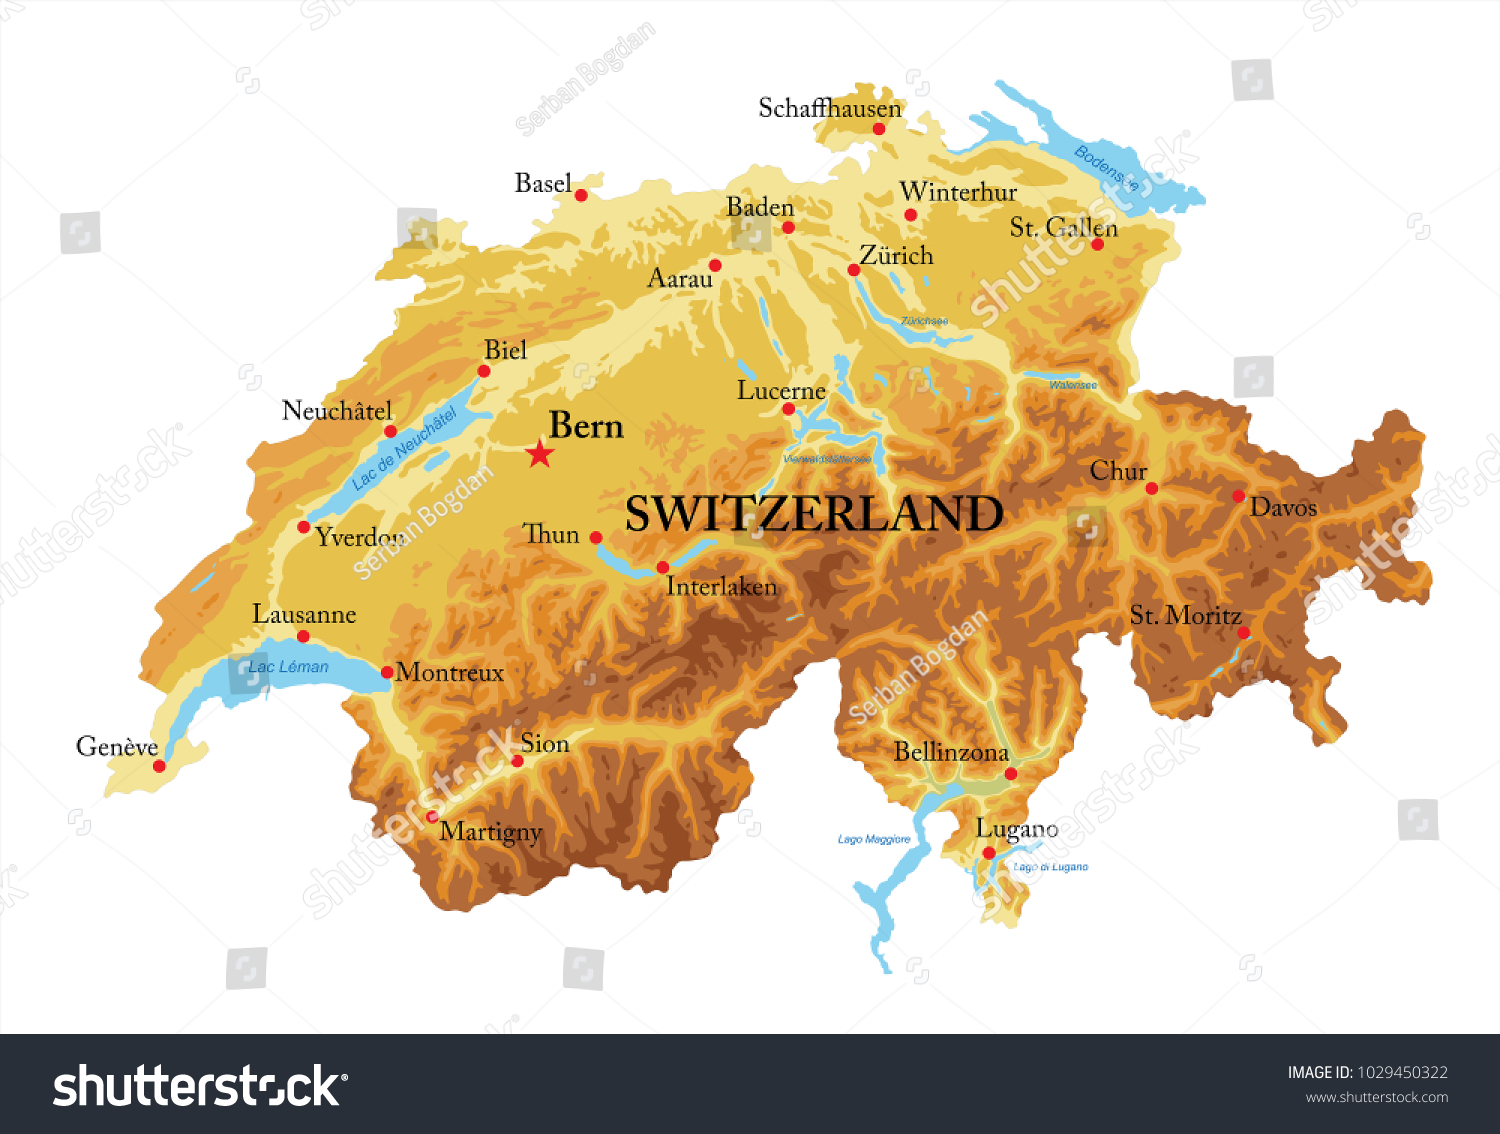 SVG of Switzerland relief map svg